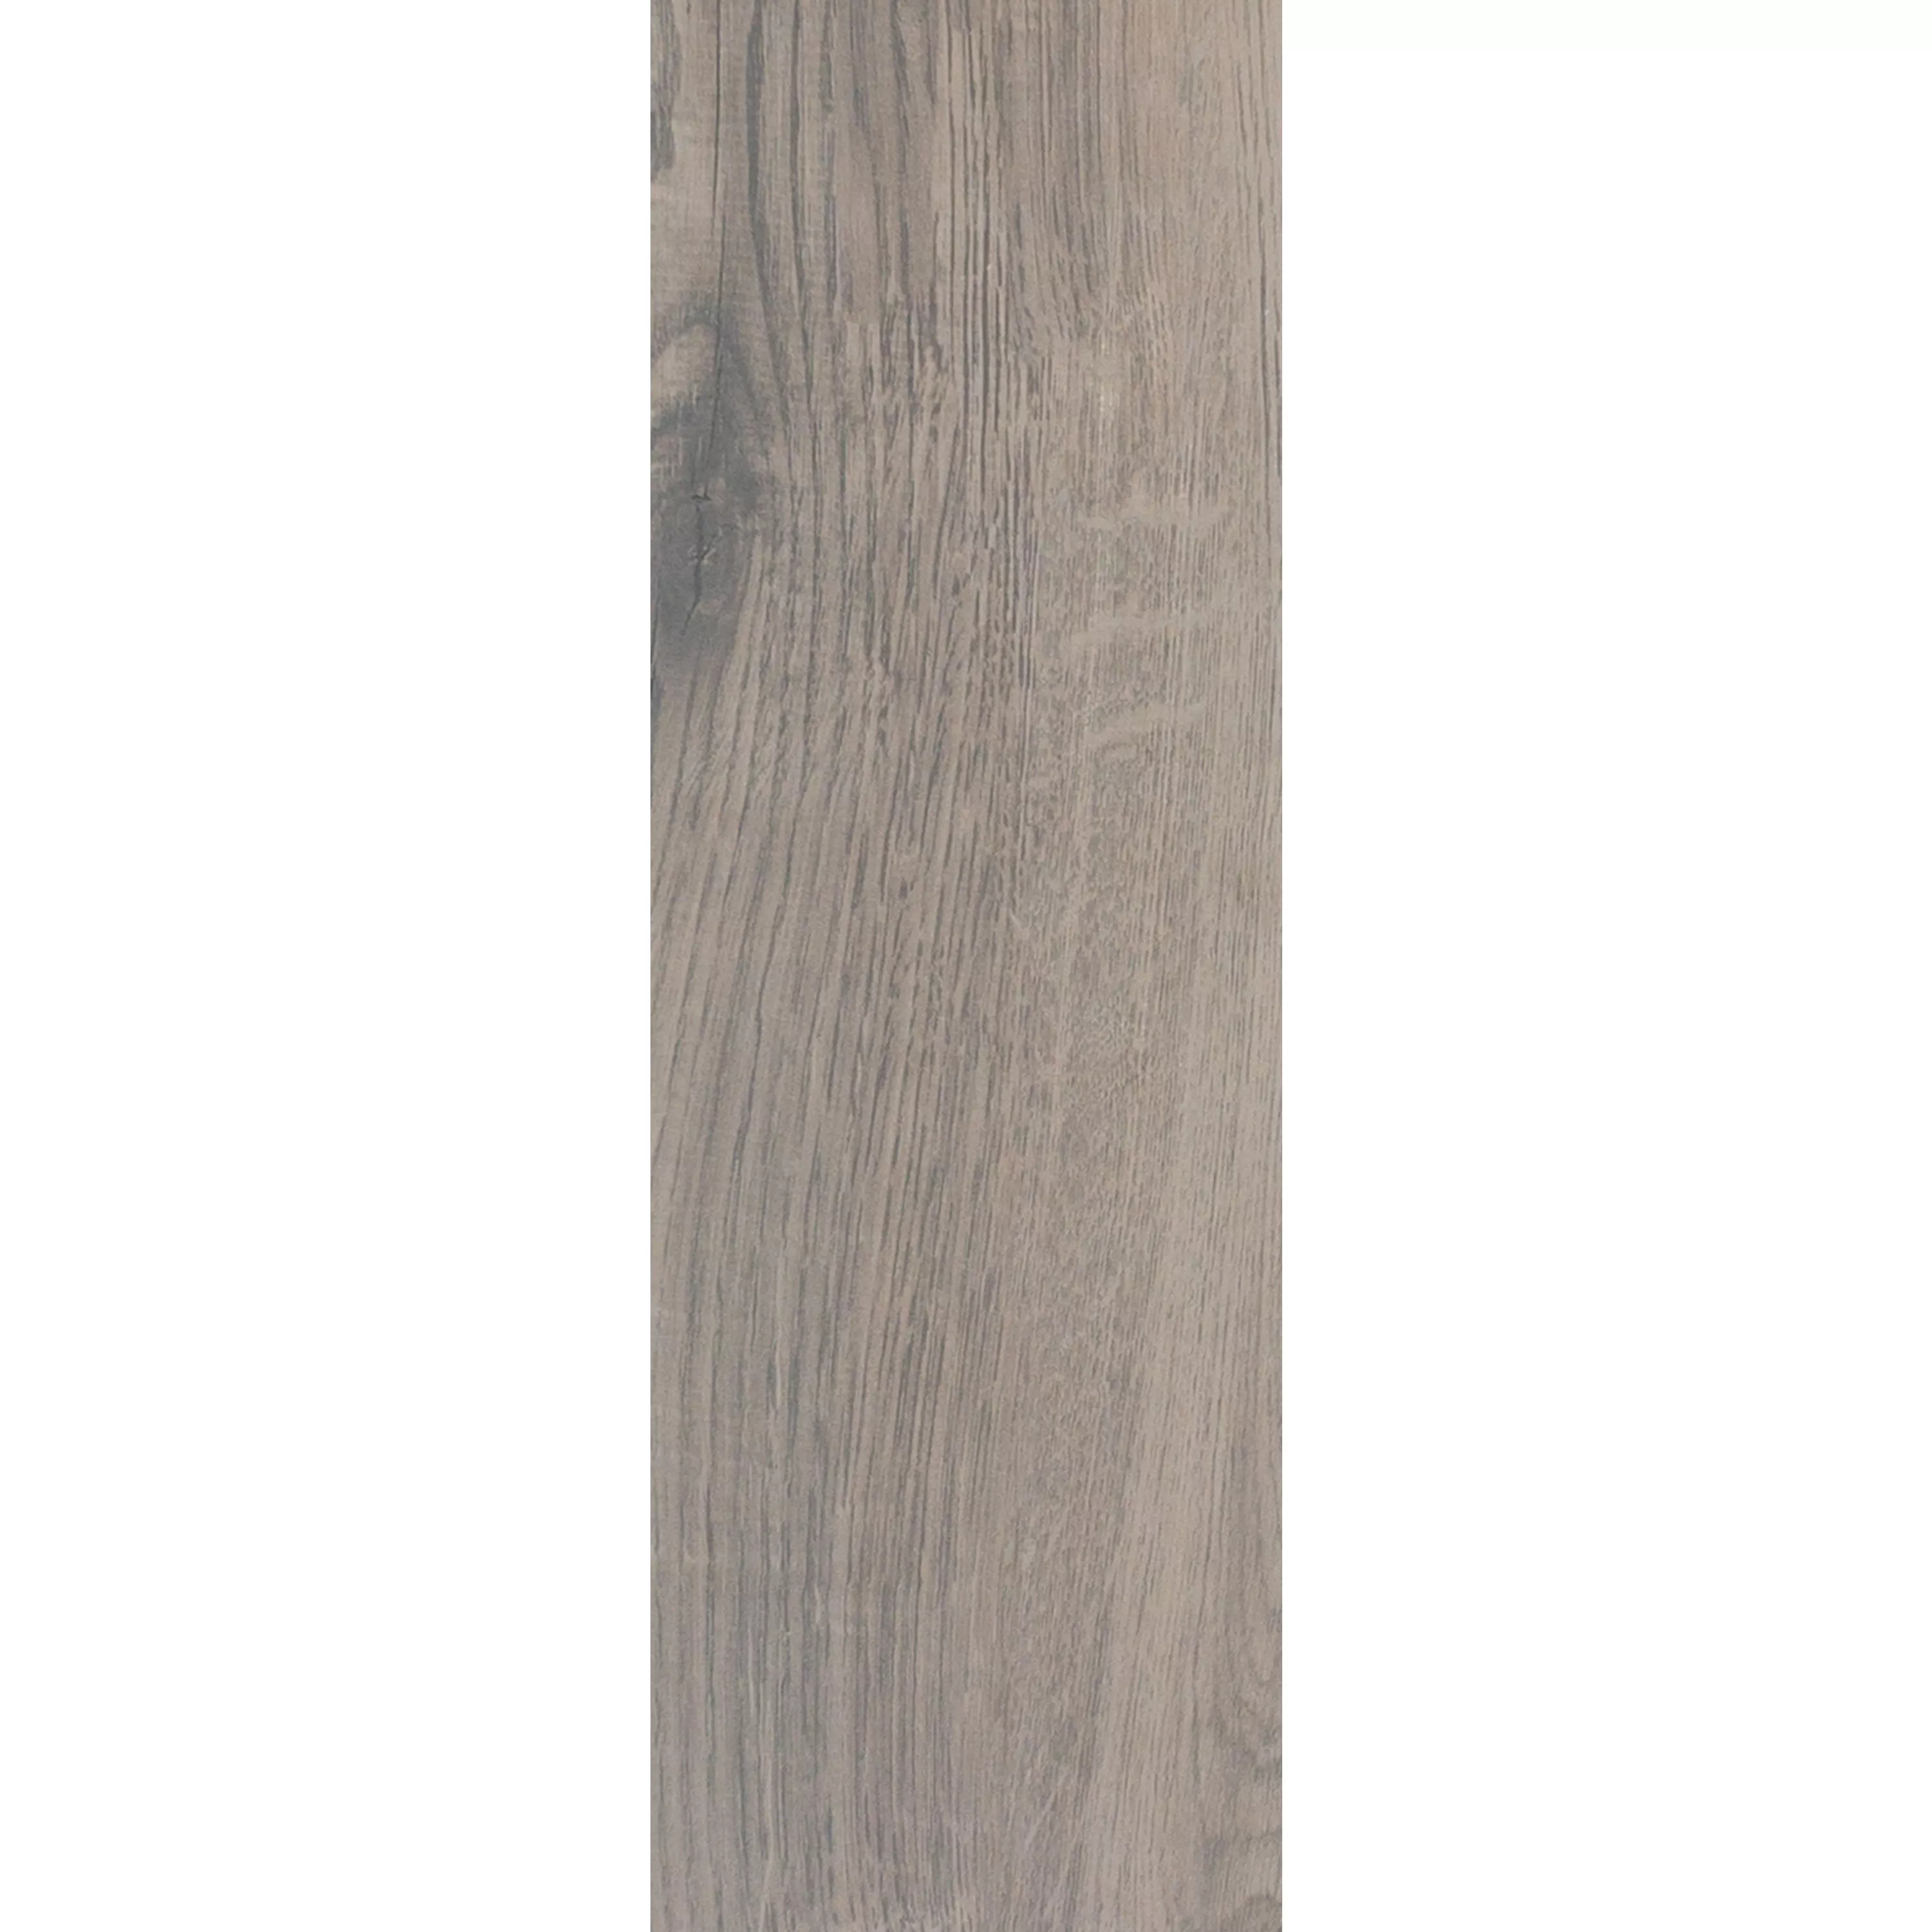 Sample Floor Tiles Wood Optic Fullwood Brown 20x120cm